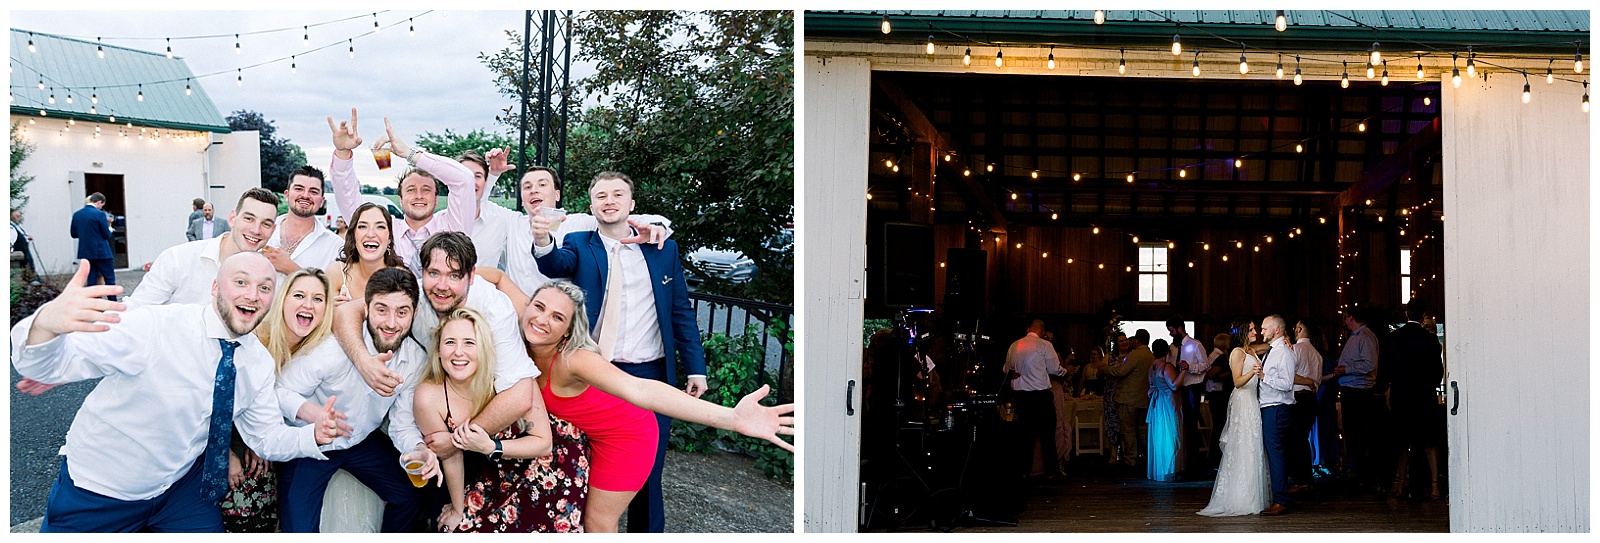 dancing and wedding fun at lakefield weddings, a modern barn wedding venue